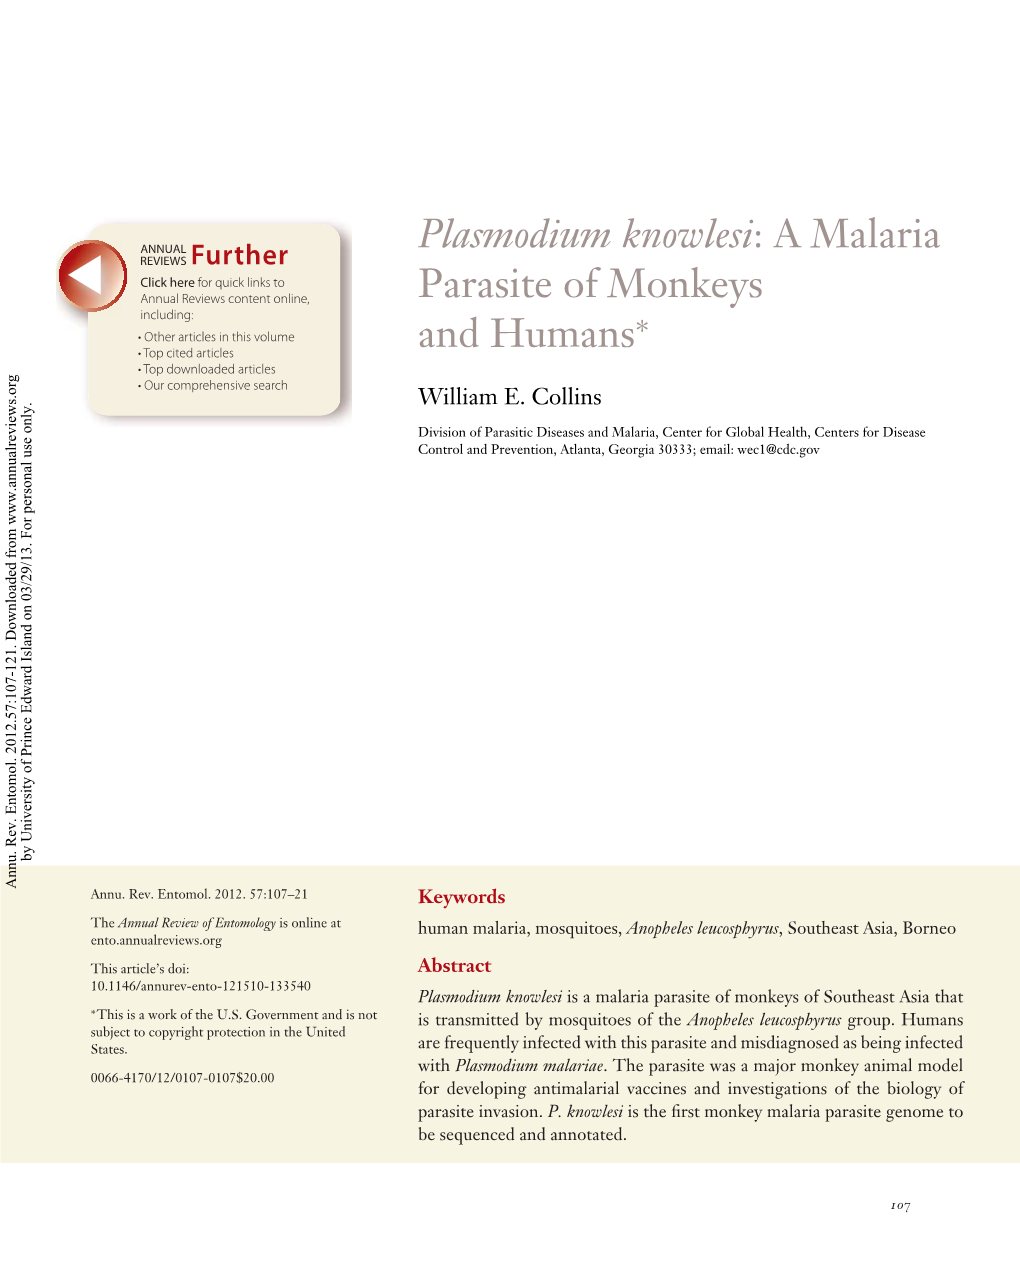 Plasmodium Knowlesi: a Malaria Parasite of Monkeys and Humans*